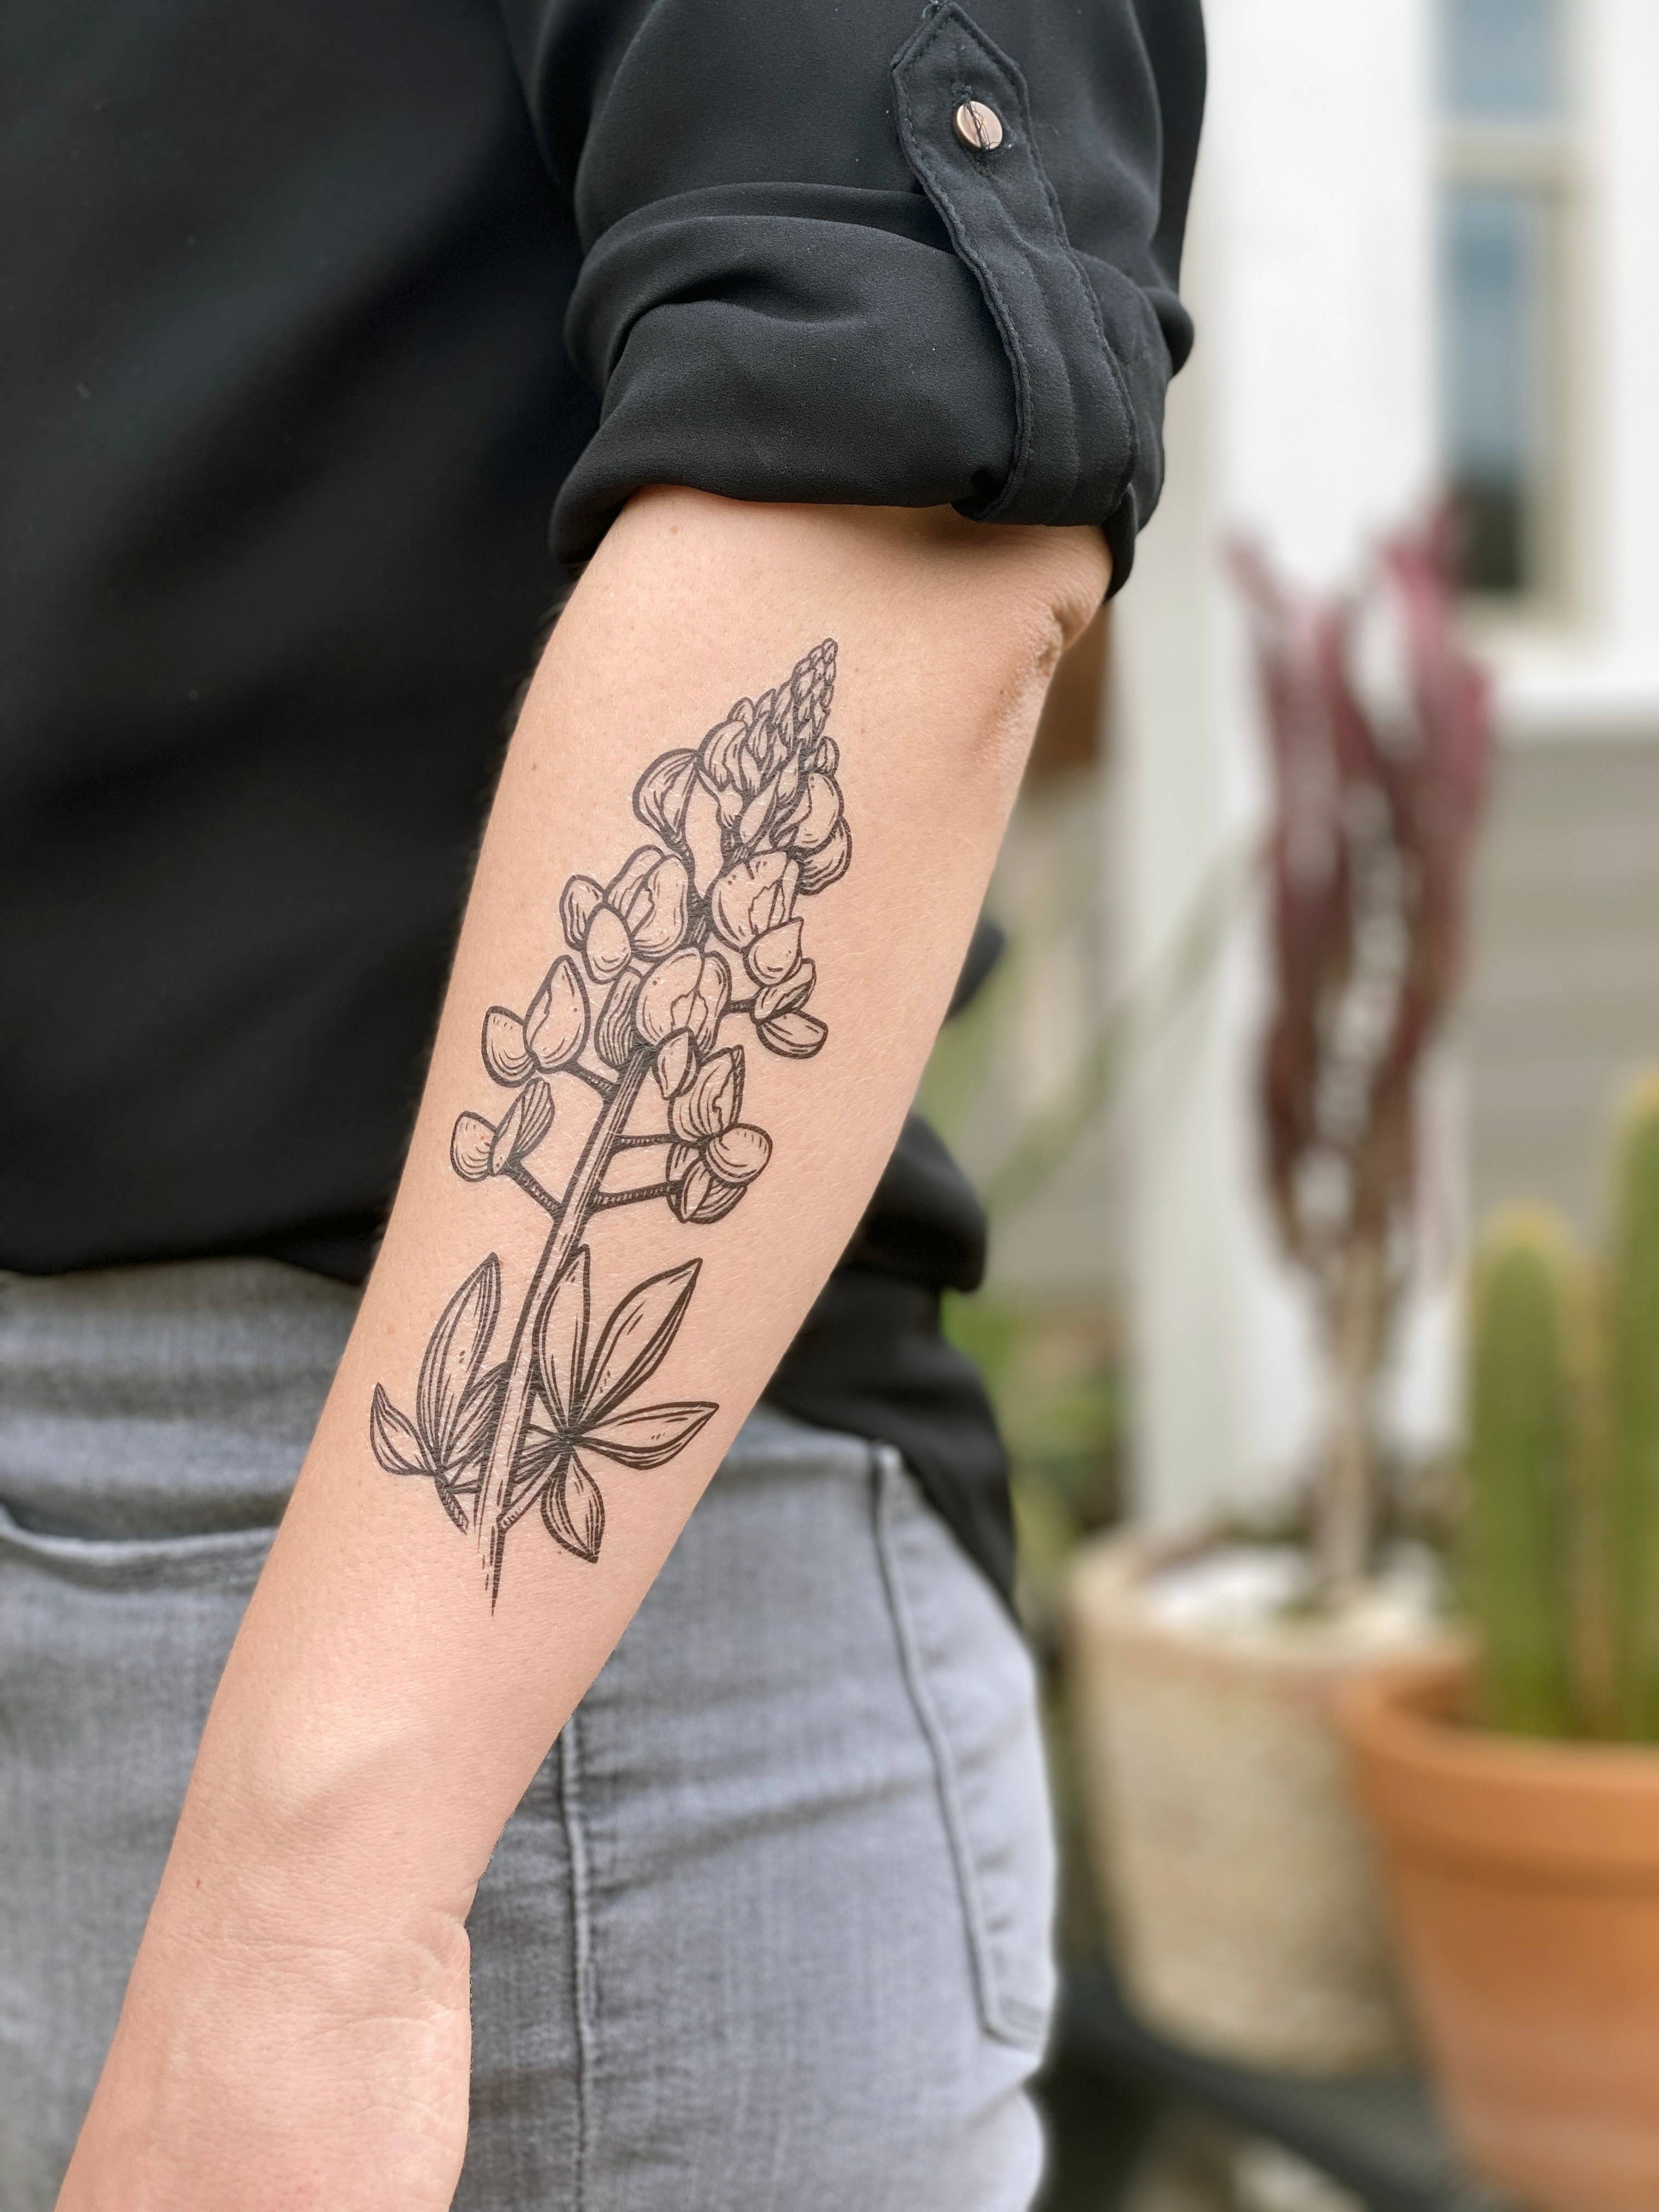 MFA in art  tattoos on Instagram bluebonnet for a texan Email  em drawing brooklyntattoo tat  Tattoos Bluebonnet tattoo  Trendy tattoos